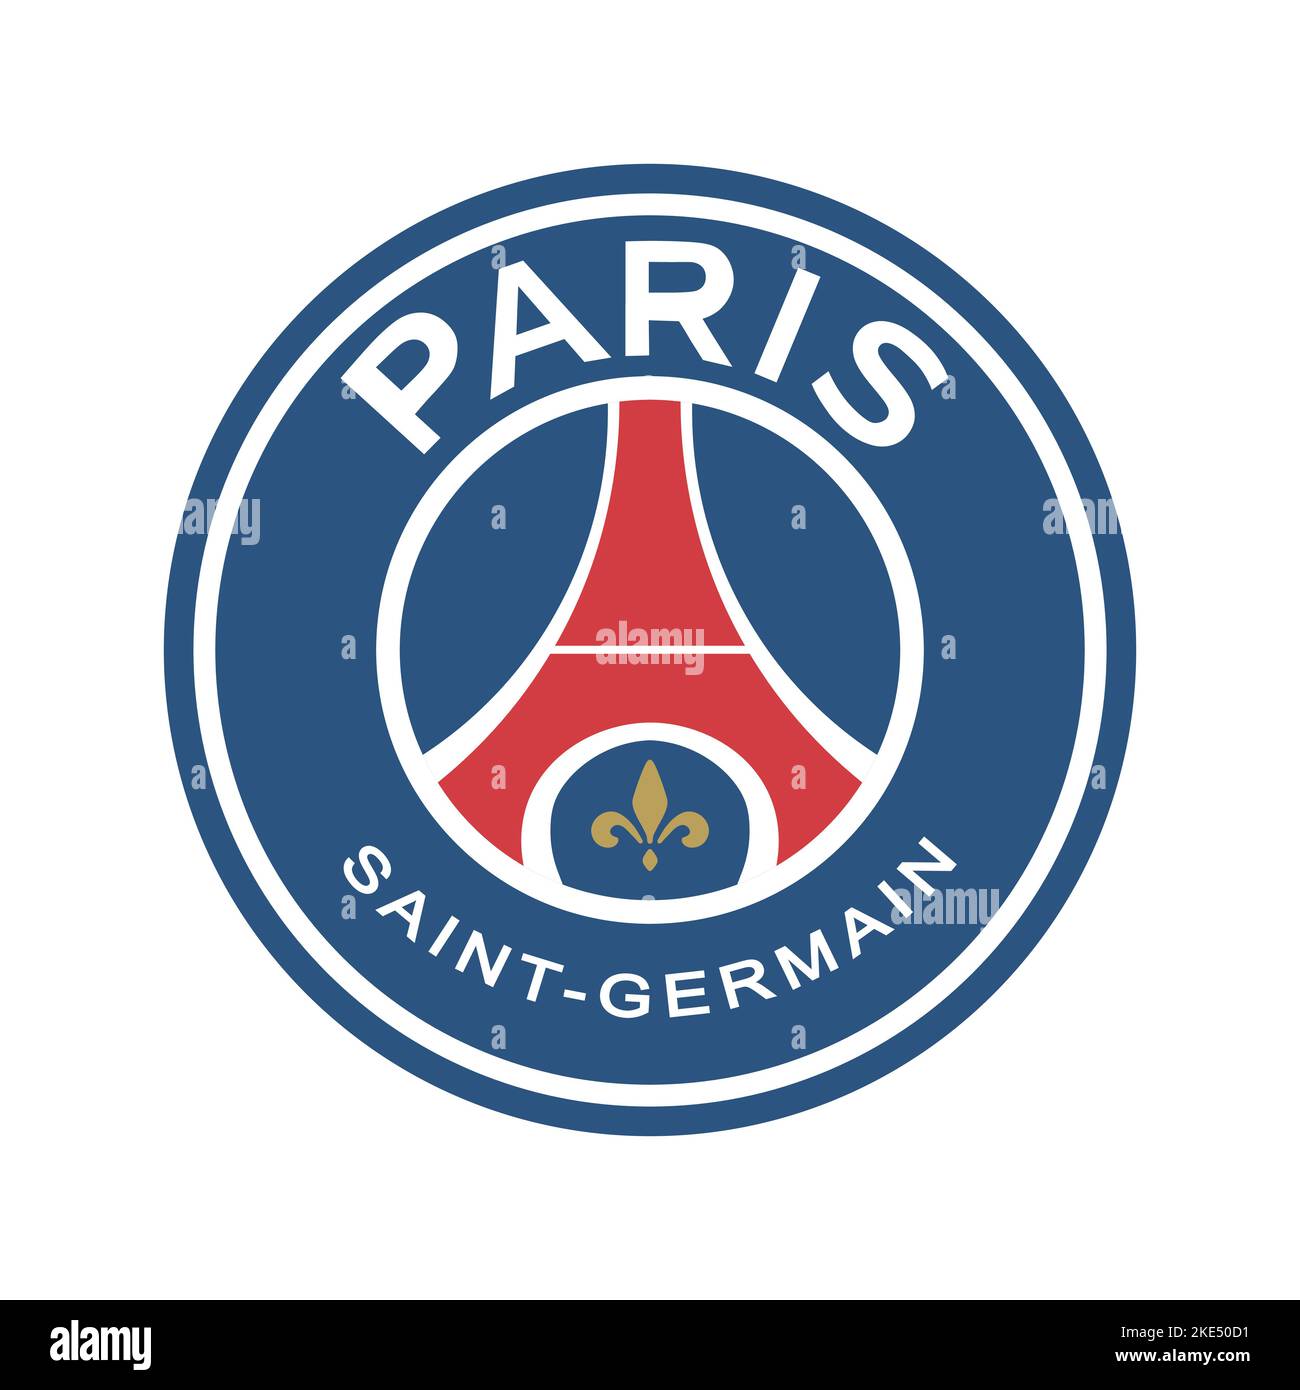 Paris Saint Germain Football Club Flag Waves Isolated in Plain and